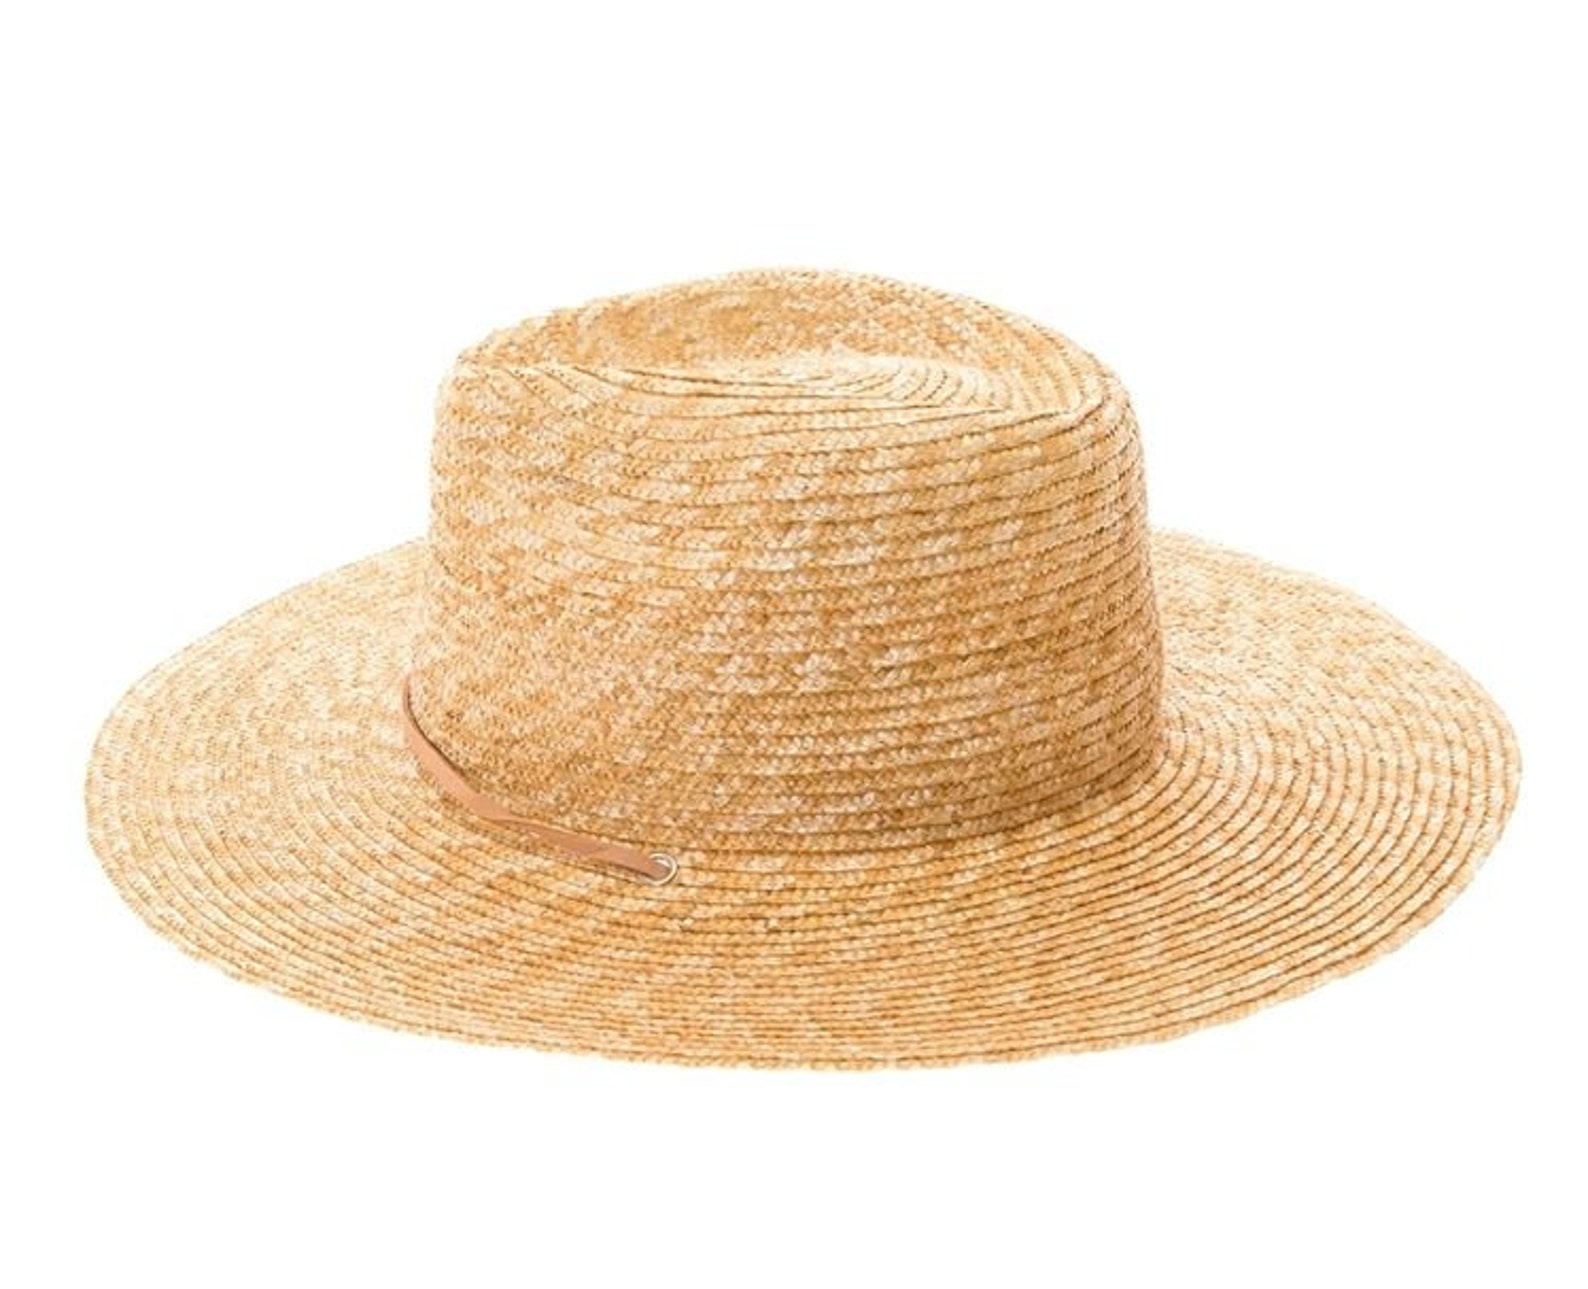 Premium Handmade Hat in a Fine Wheat Straw Braid With a Stiff - Etsy UK